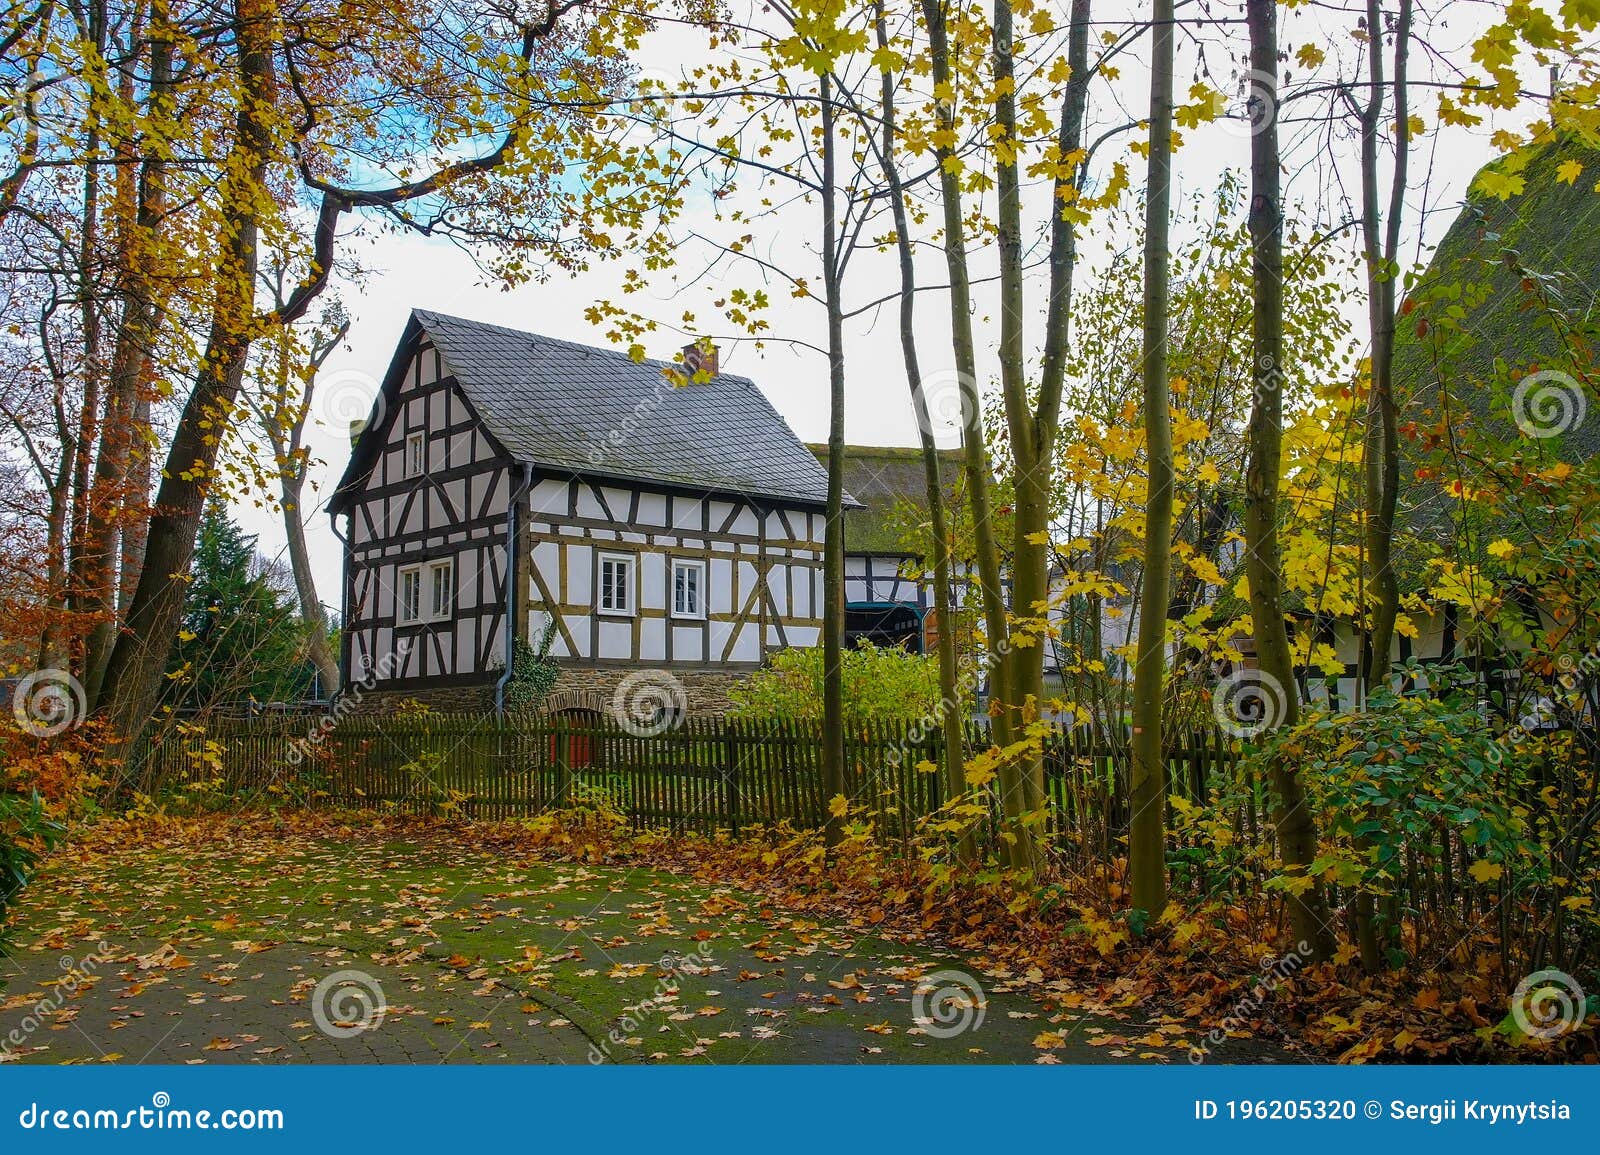 german traditional fahverk houses in hachenburg, rheinland-pfalz, germany